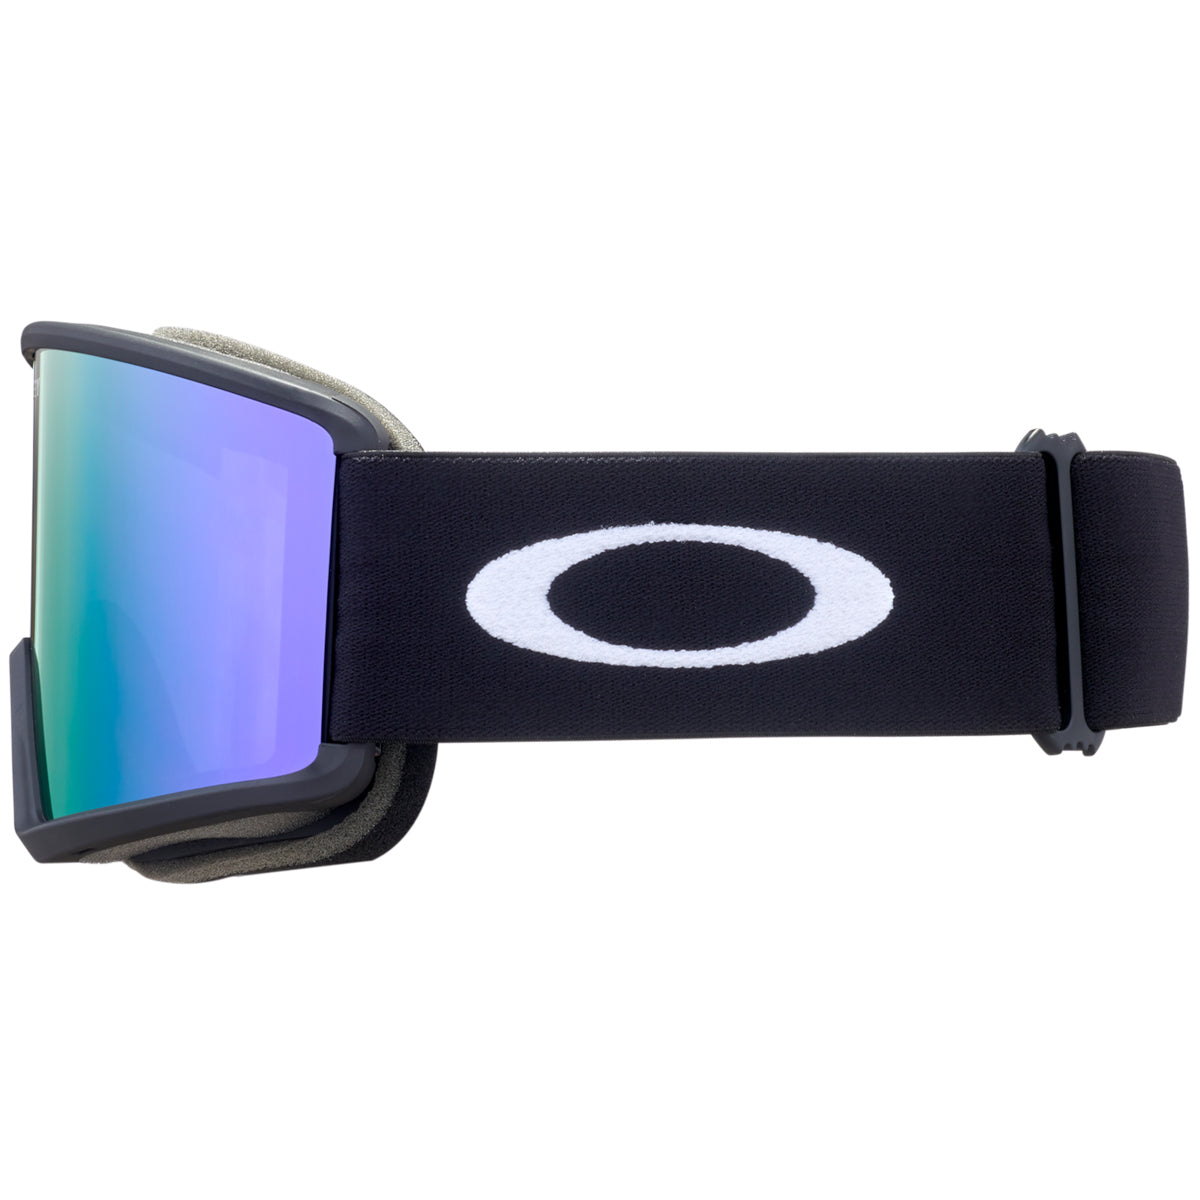 Oakley Target Line Snowboard Goggles - Matte Black/Violet Iridium image 2